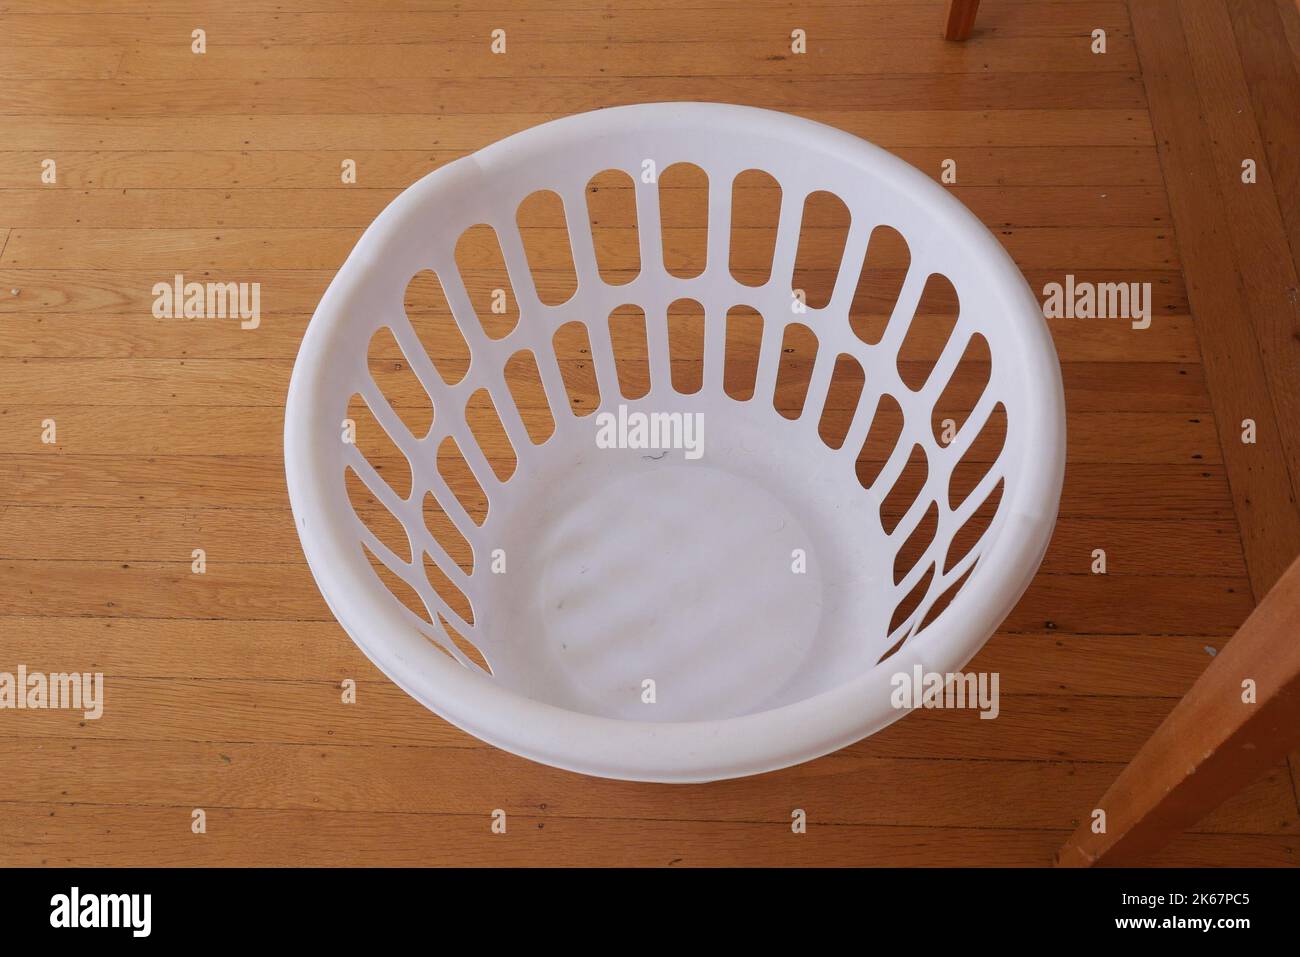 An empty white plastic laundry basket on wooden floors. Stock Photo